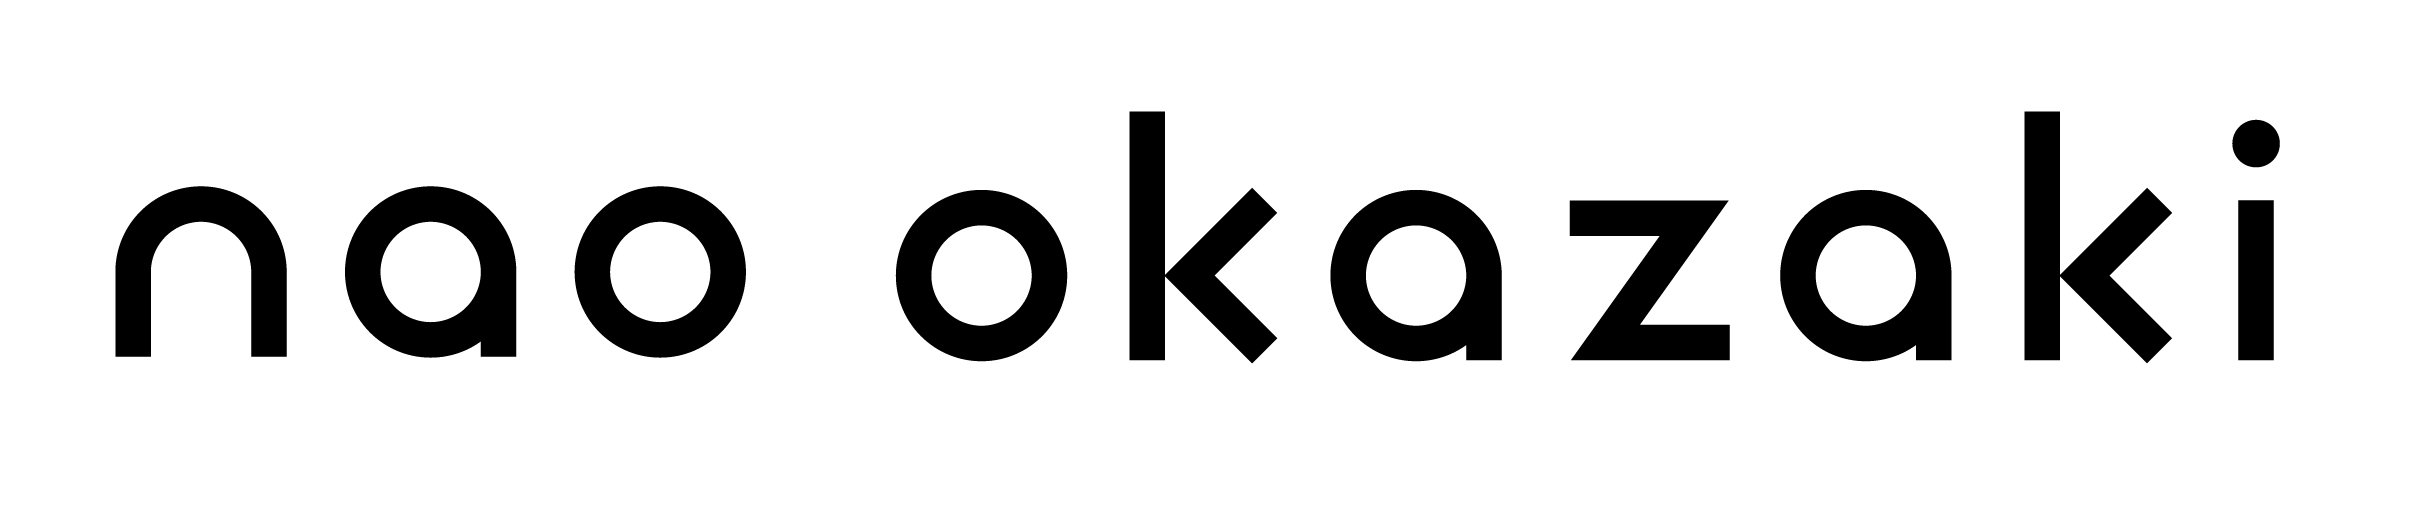 OkazakiNao Portforio website